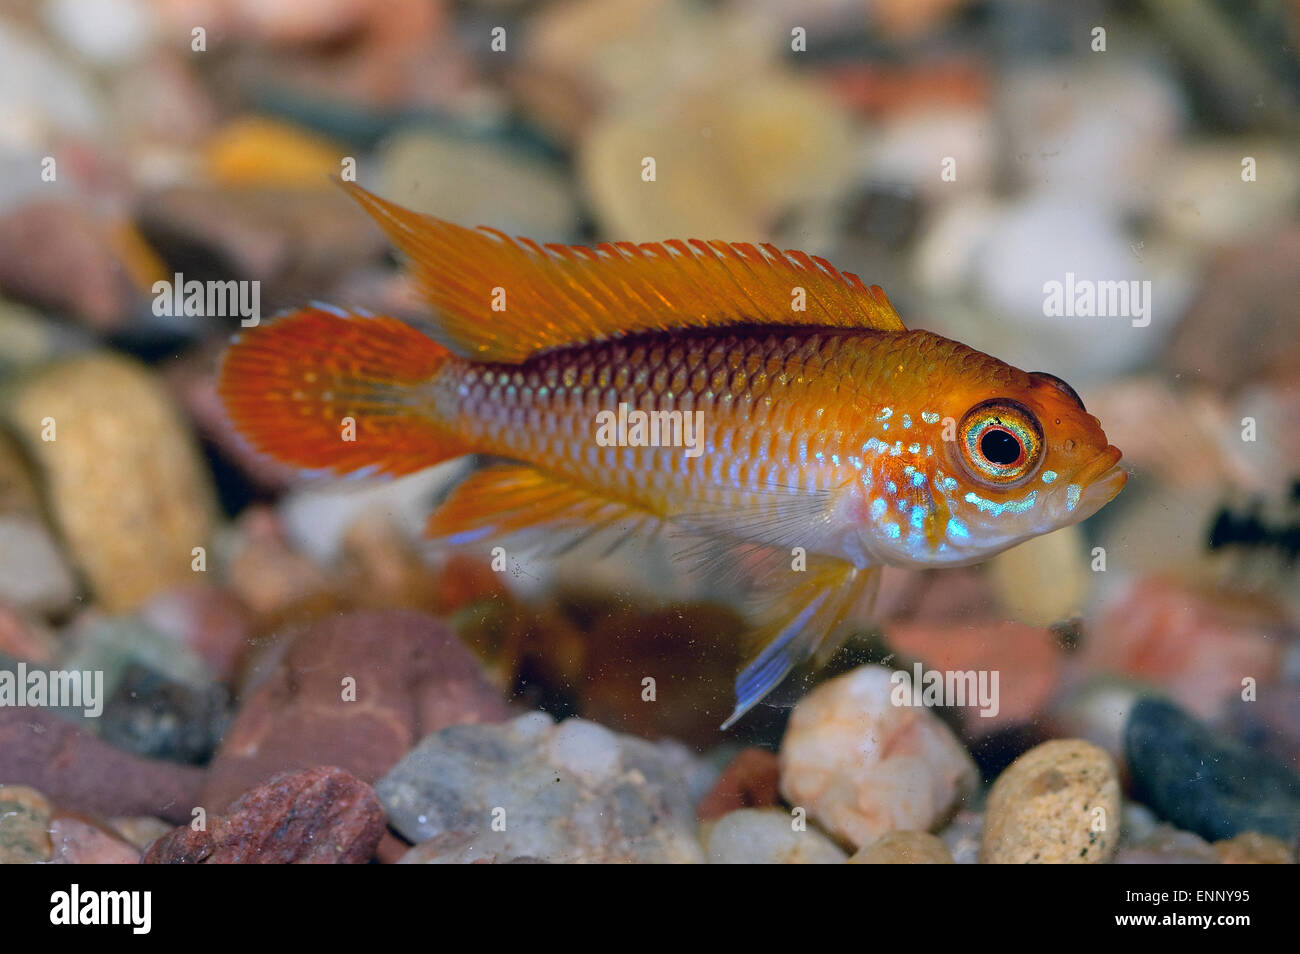 Nice orange cichlid fish from genus Apistogramma. Stock Photo